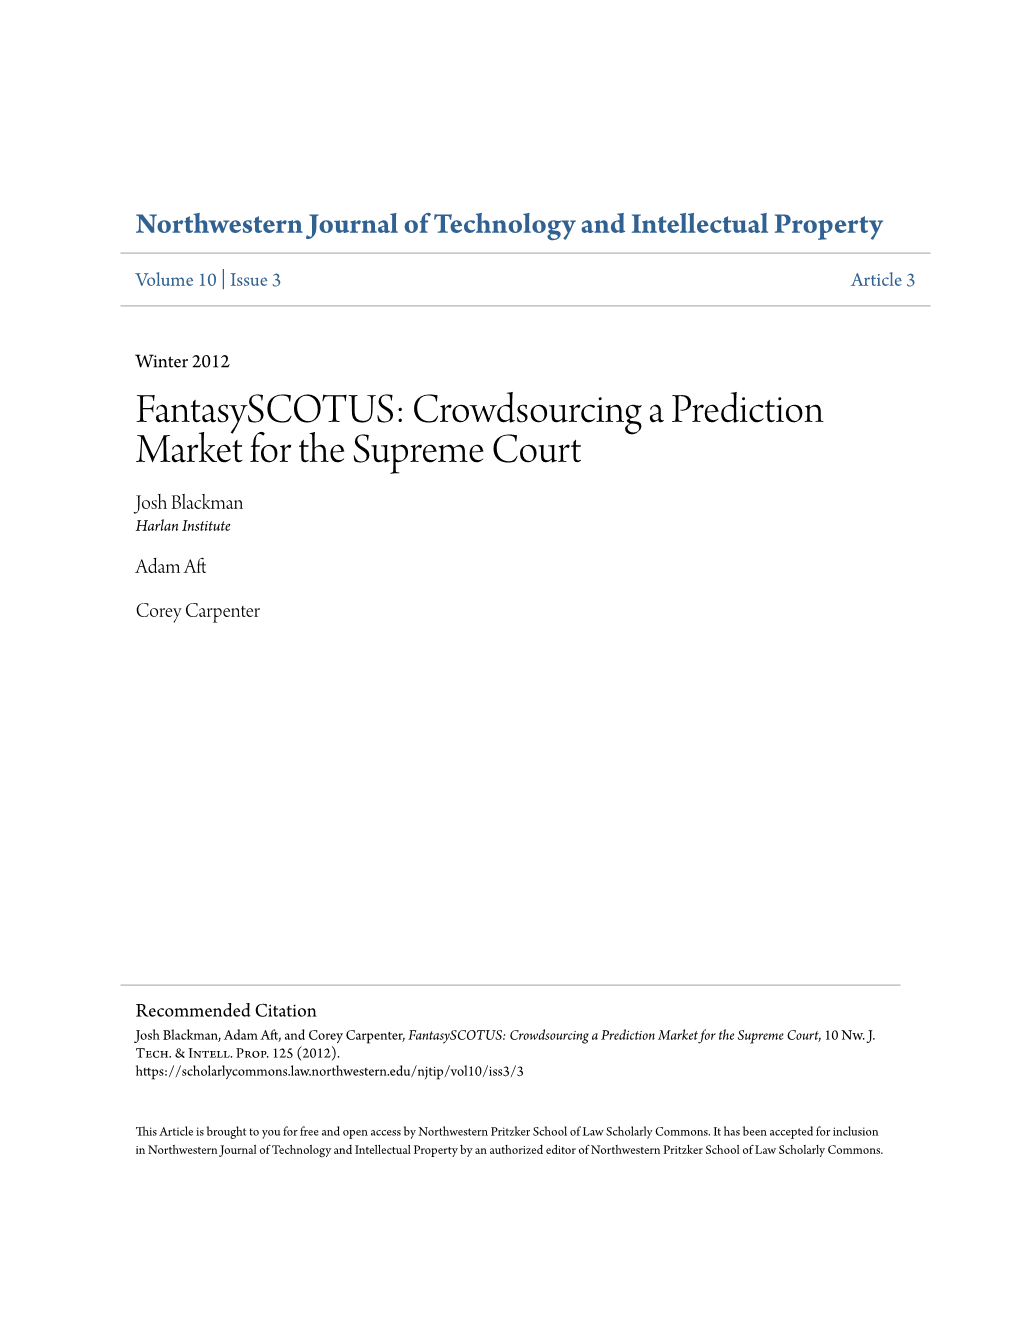 Fantasyscotus: Crowdsourcing a Prediction Market for the Supreme Court Josh Blackman Harlan Institute